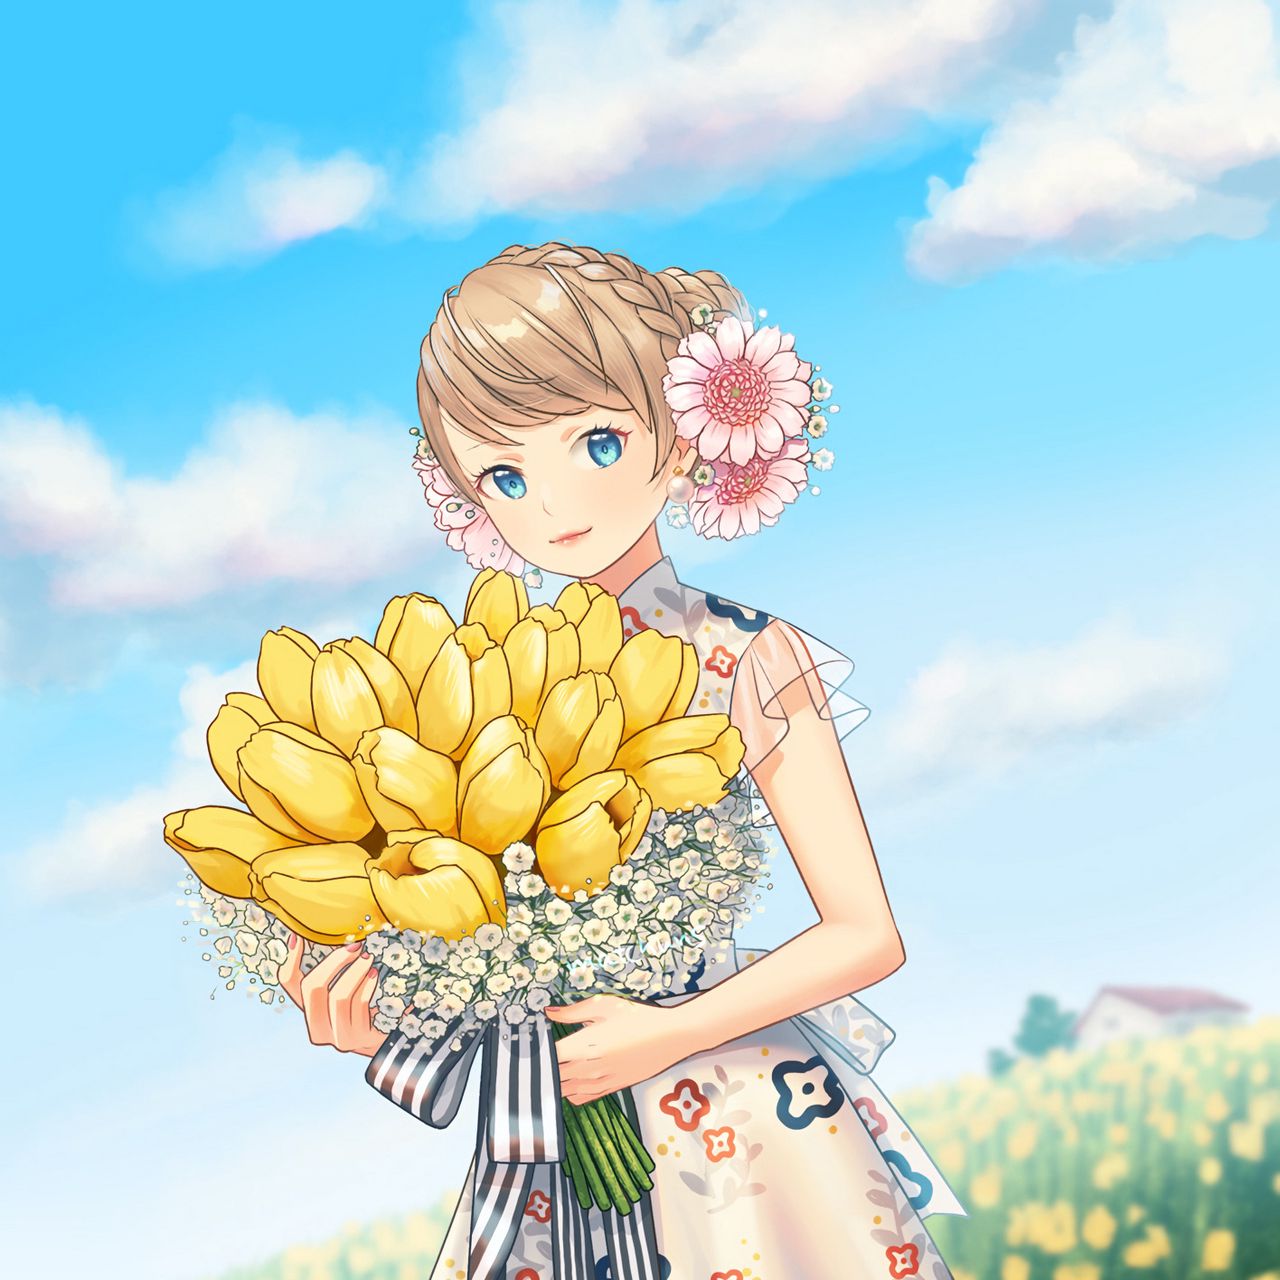 Download wallpaper 1280x1280 girl, tulips, flowers, bouquet, field, anime  ipad, ipad 2, ipad mini for parallax hd background